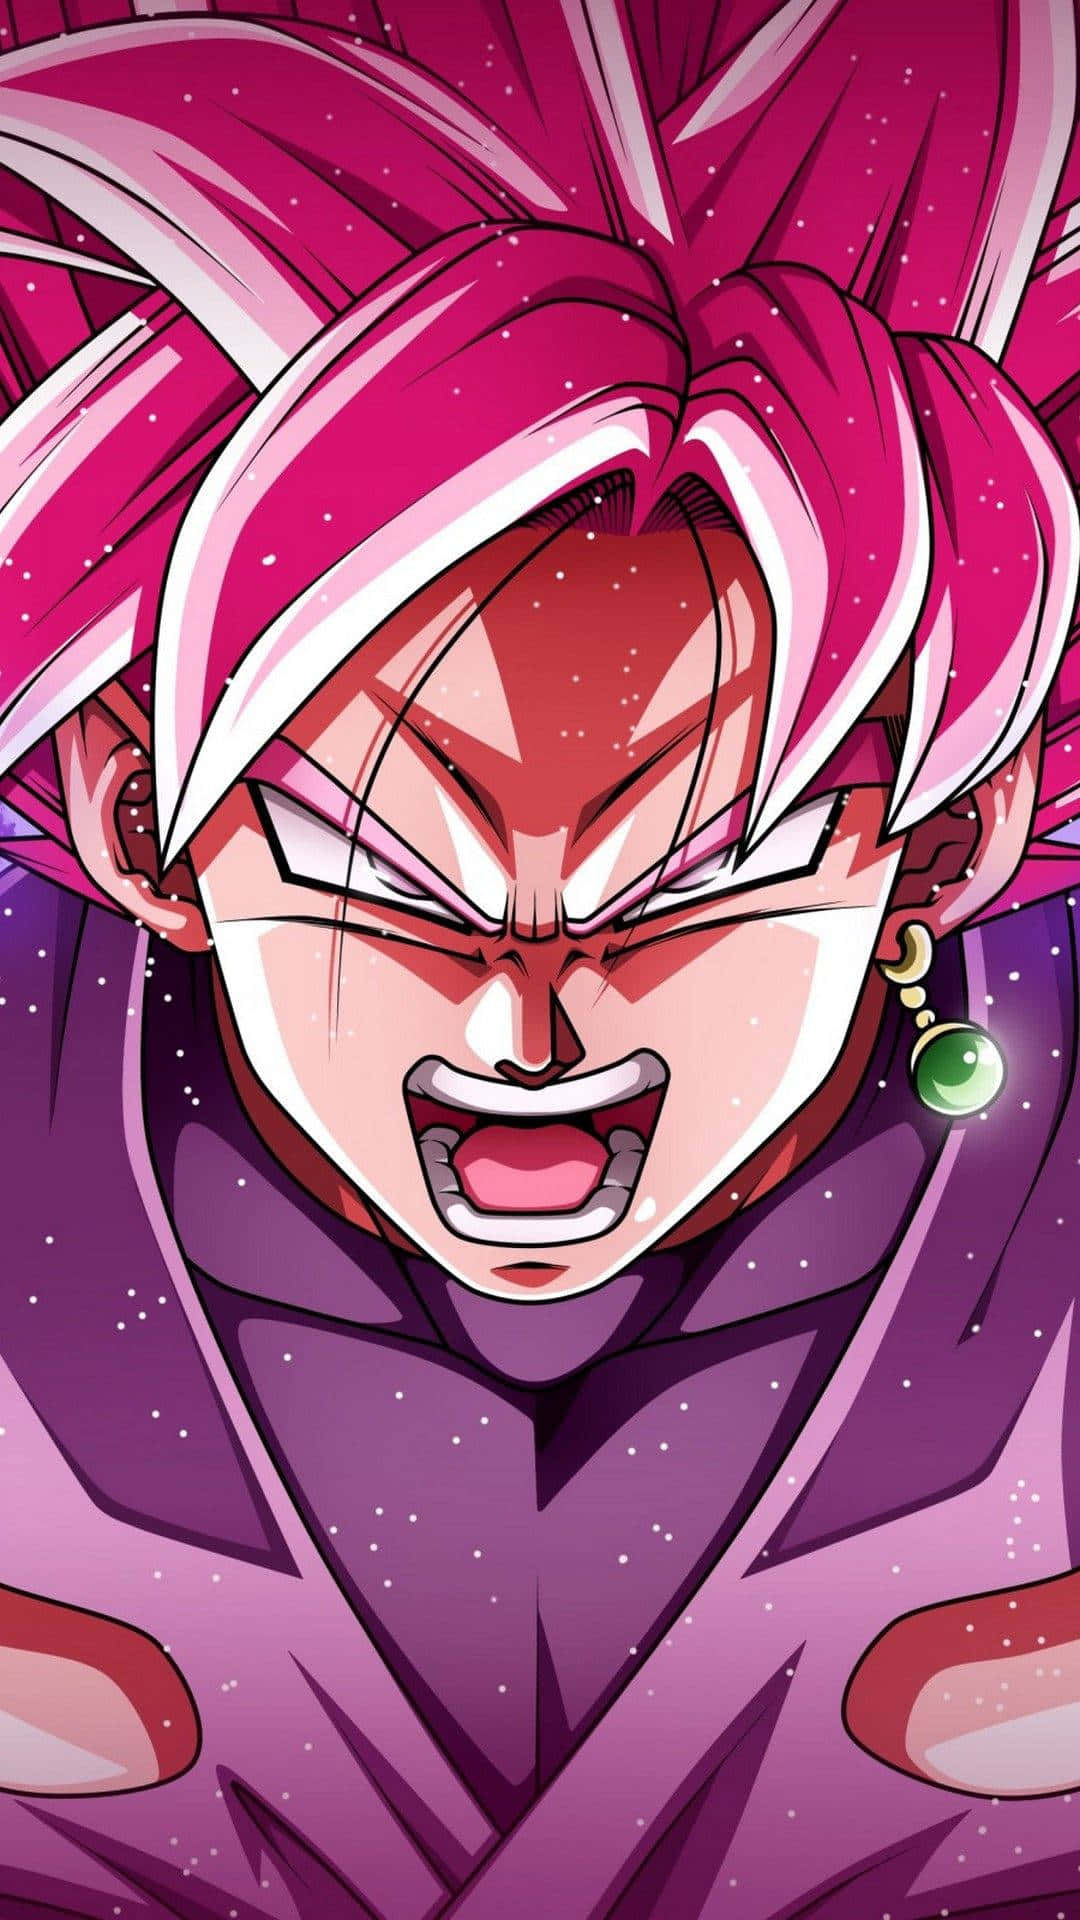 'Goku unleashes his inner rage' Wallpaper